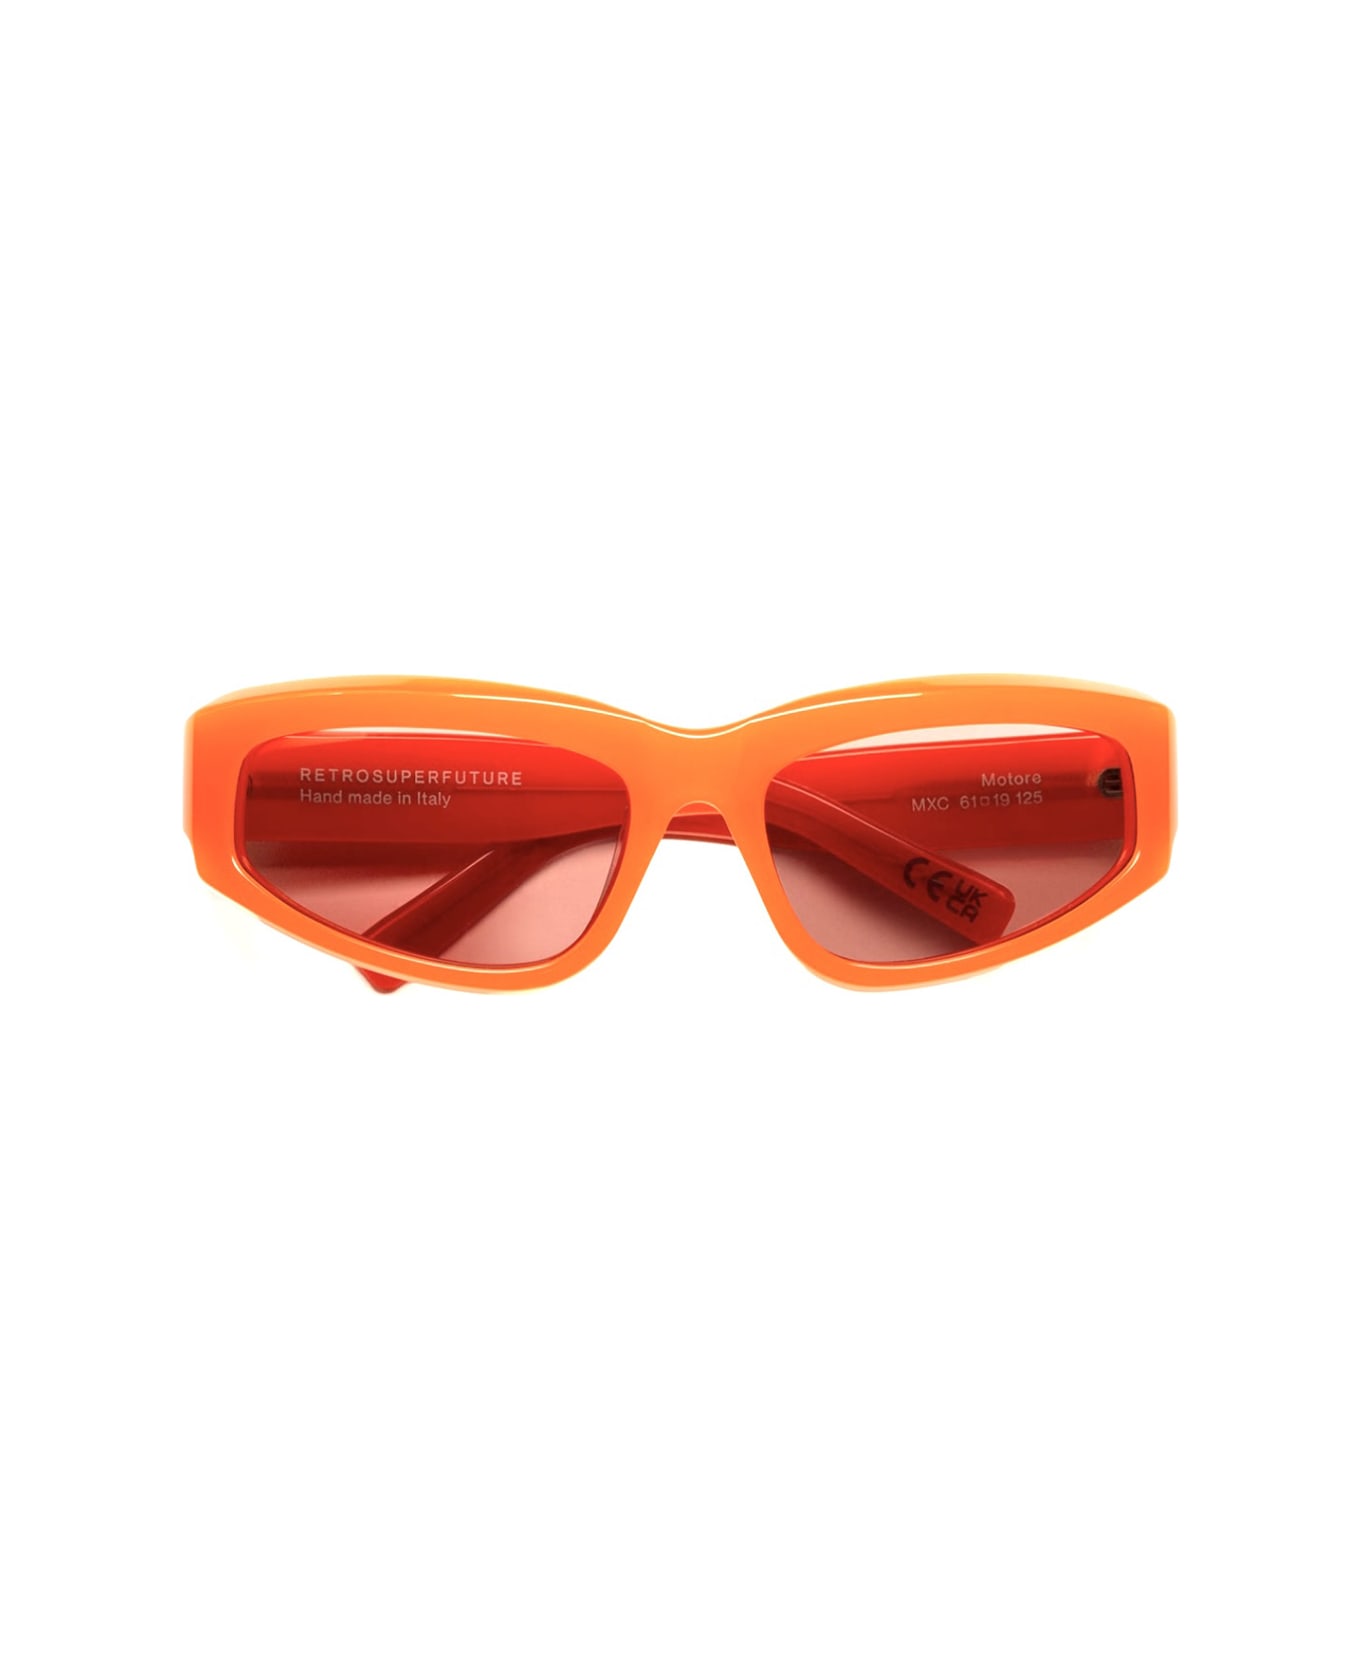 RETROSUPERFUTURE Motore Juice Mxc Sunglasses - Arancione サングラス